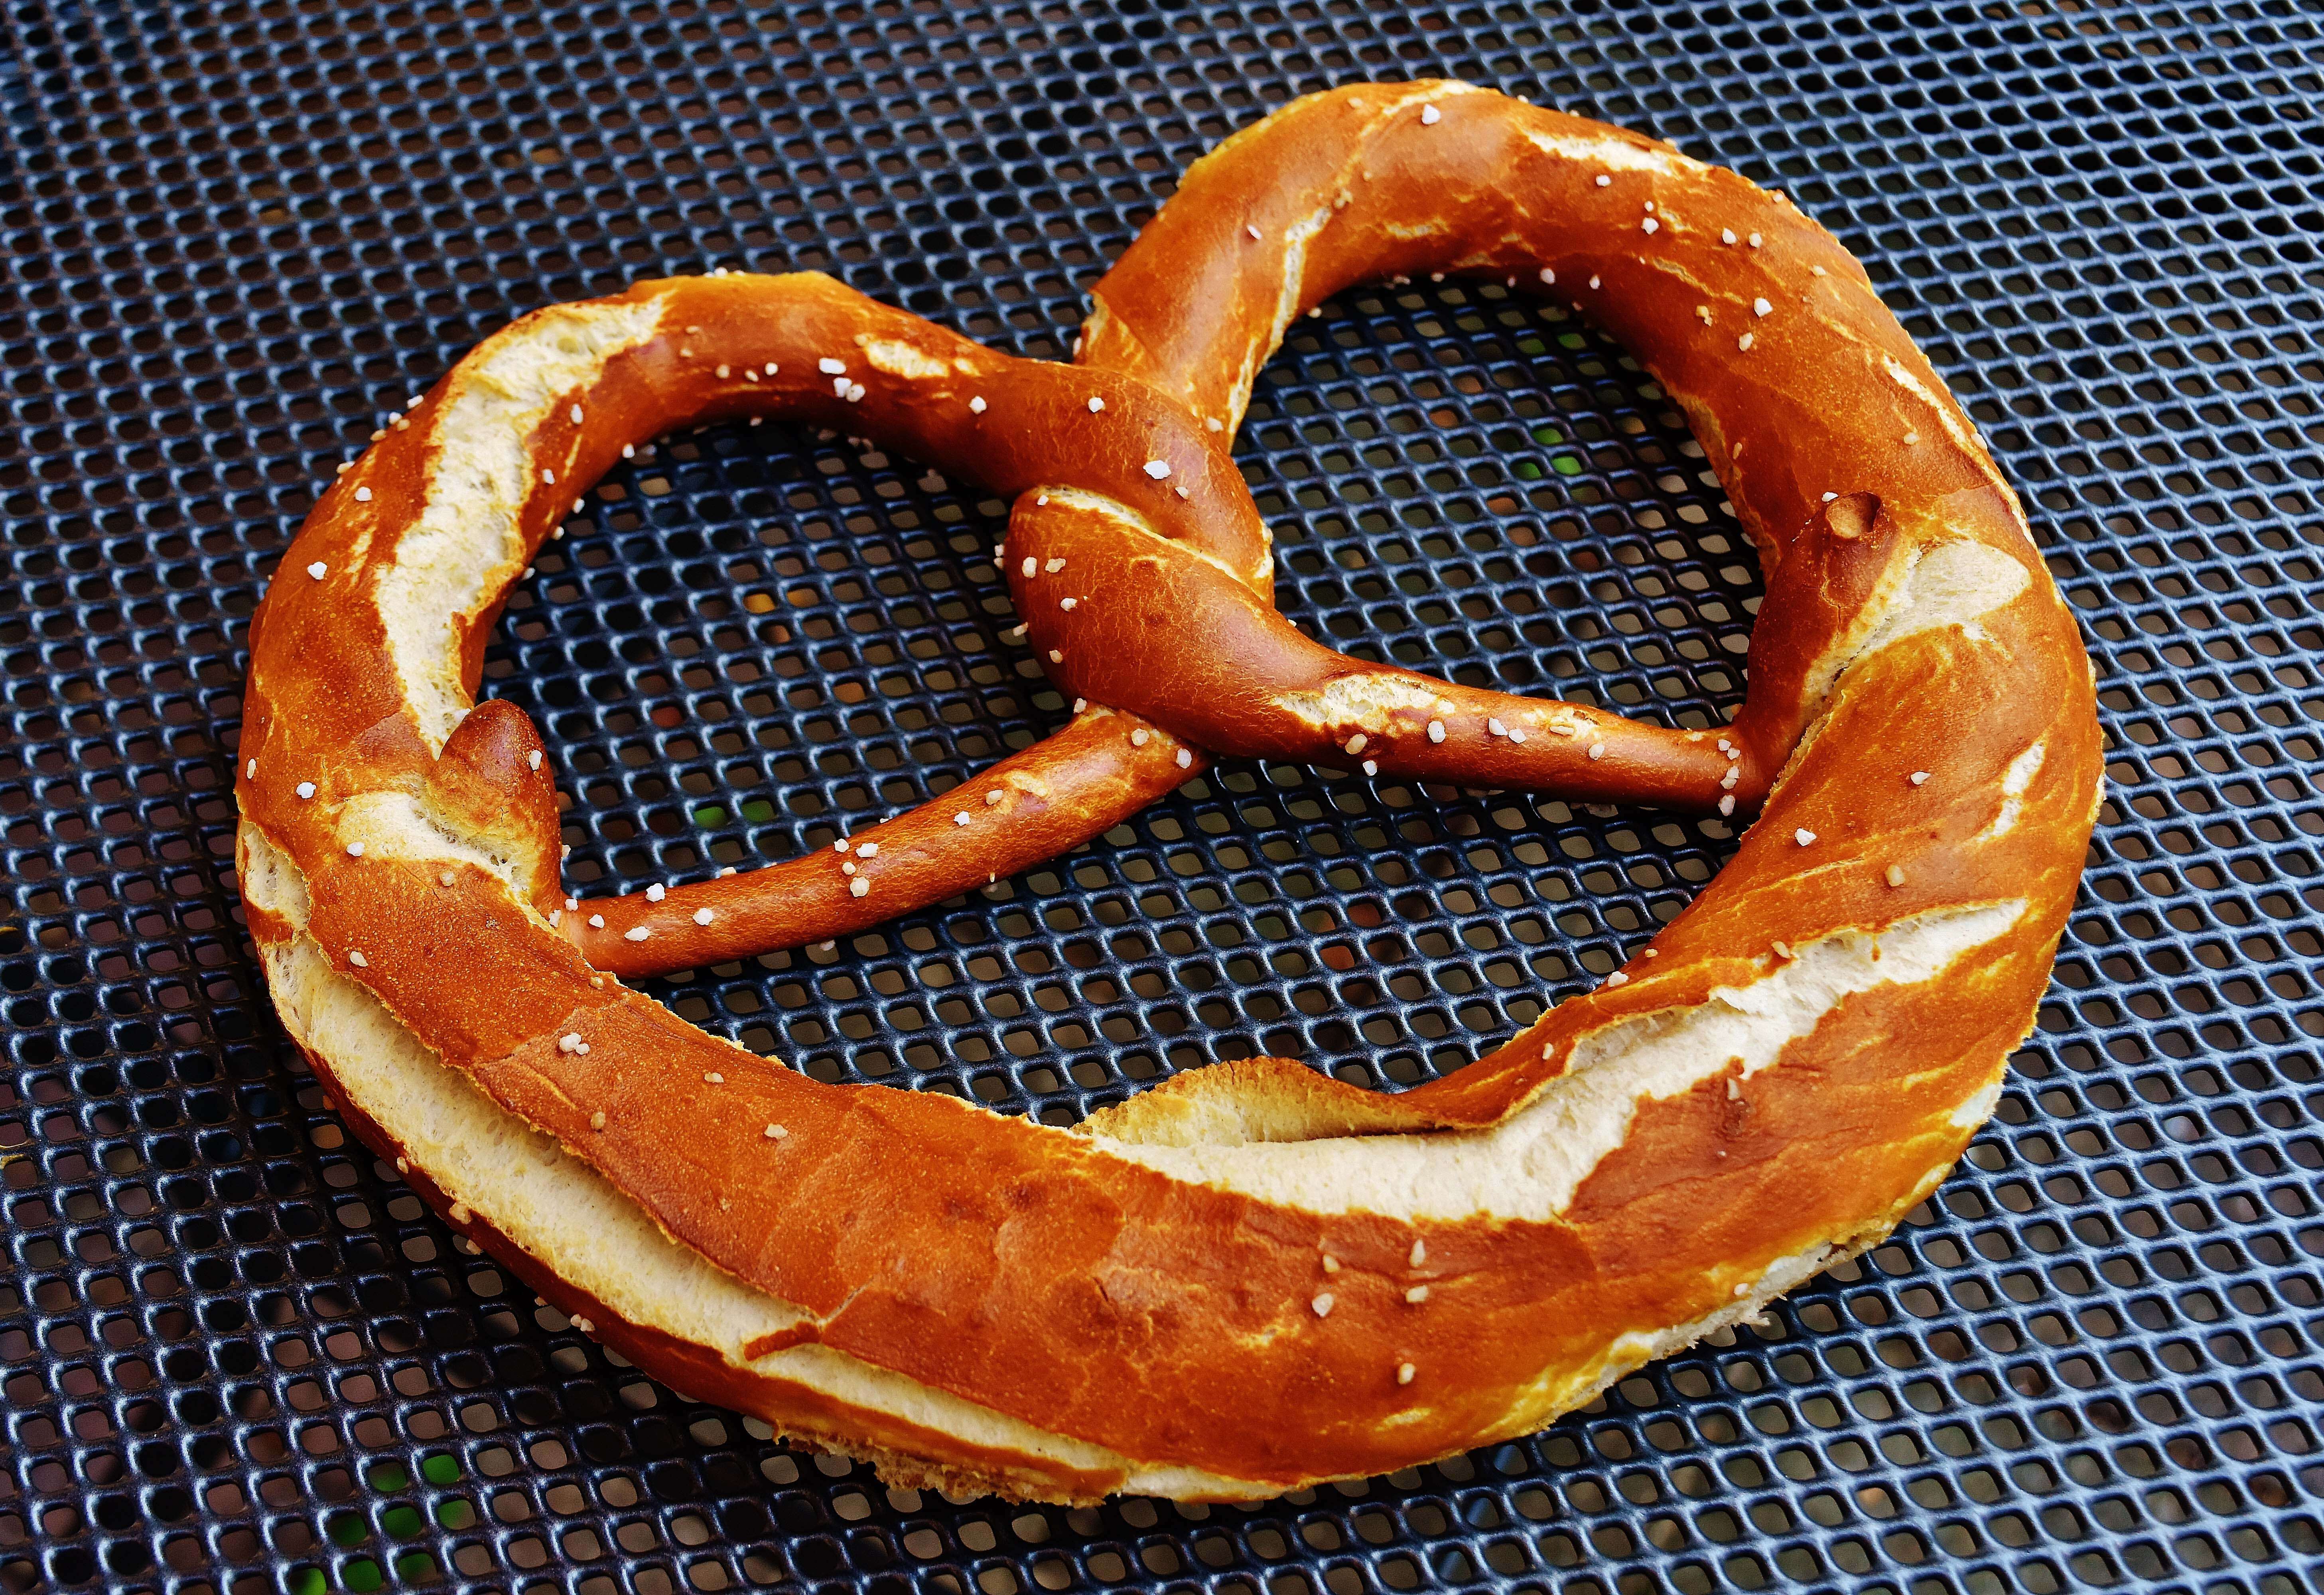 original Pixabay image of pretzels